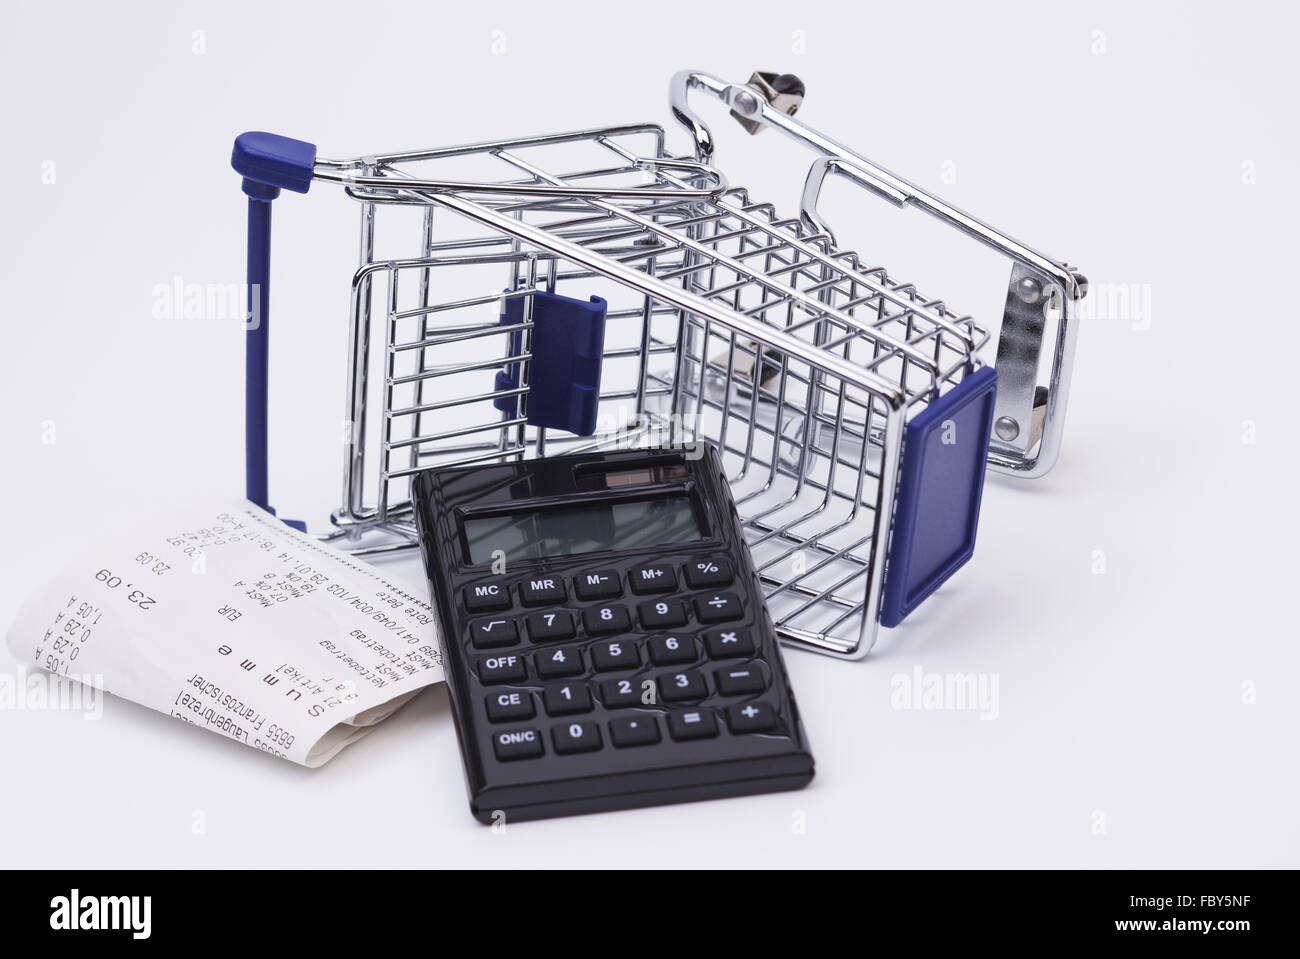 Shopping till receipt calculator and cart Stock Photo